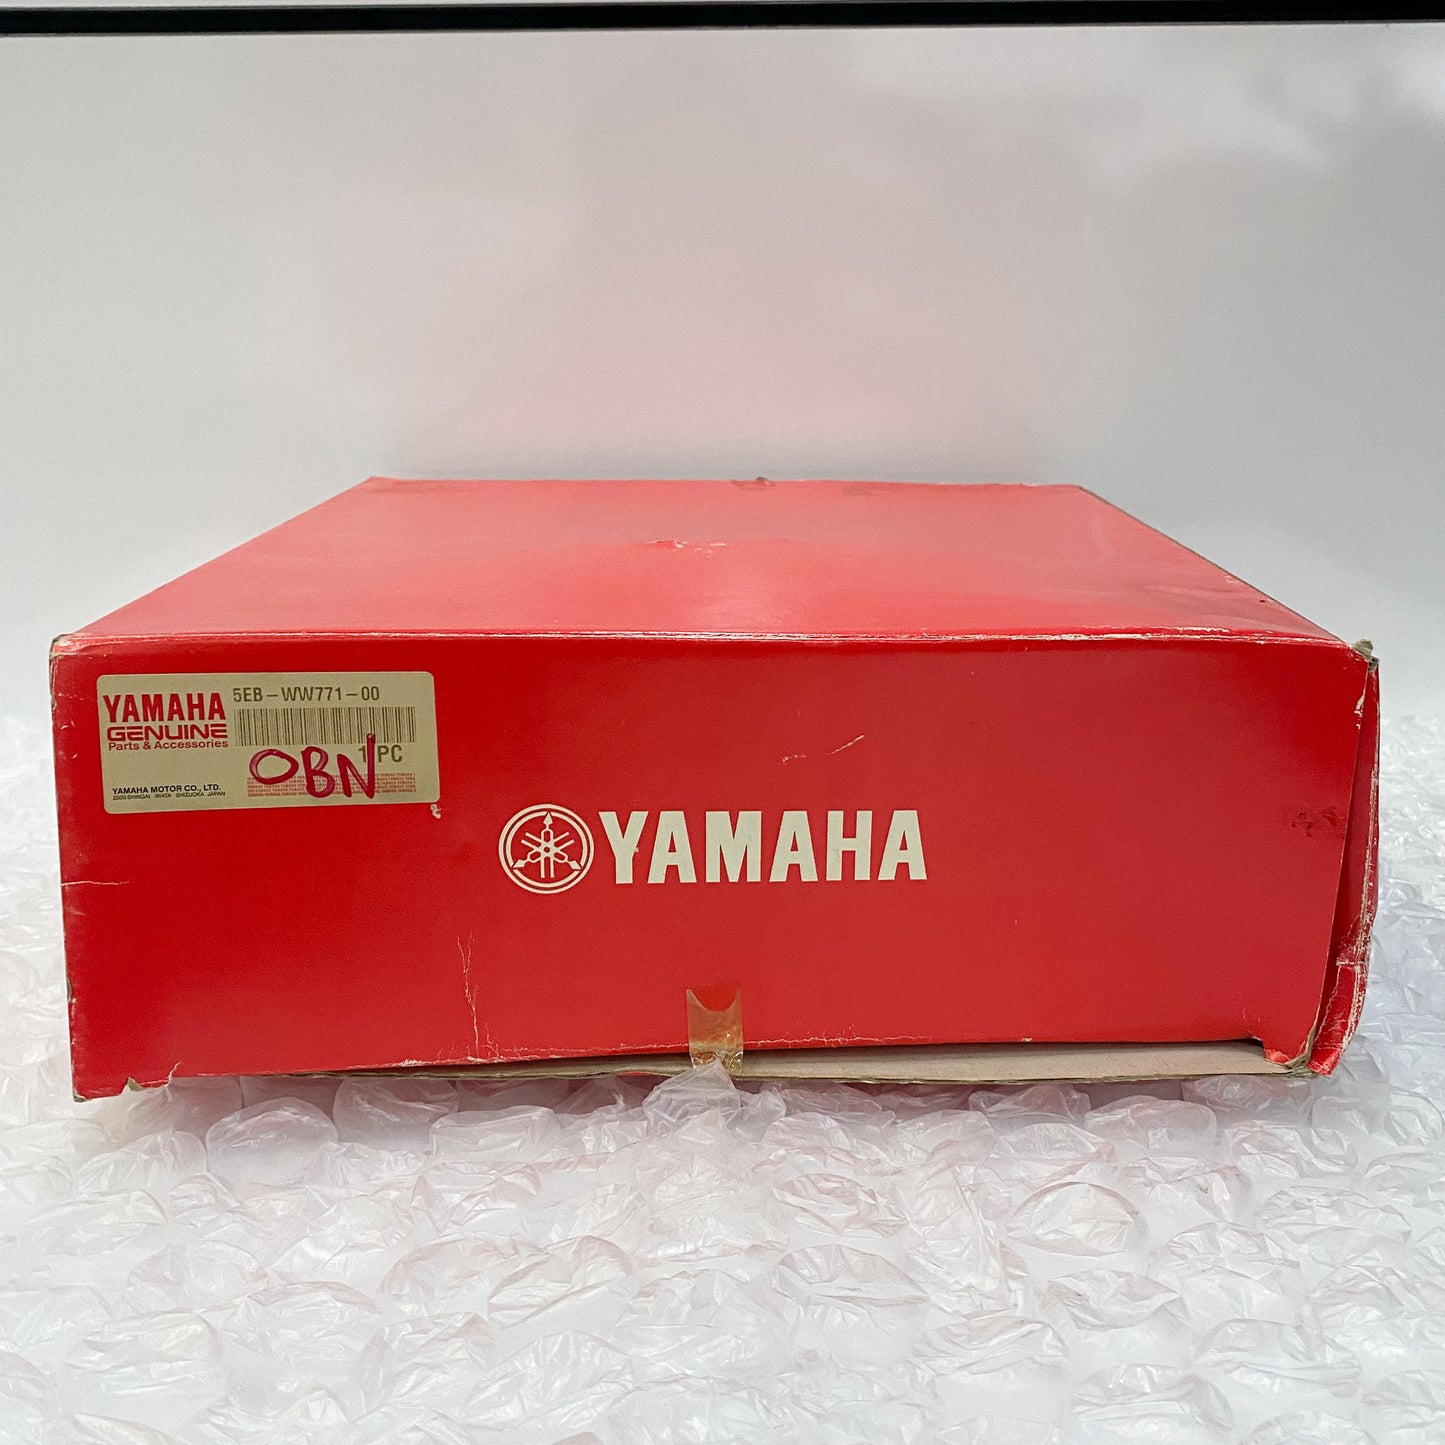 Yamaha '00 R6 Seat Cover, Black 5EB-WW771-00